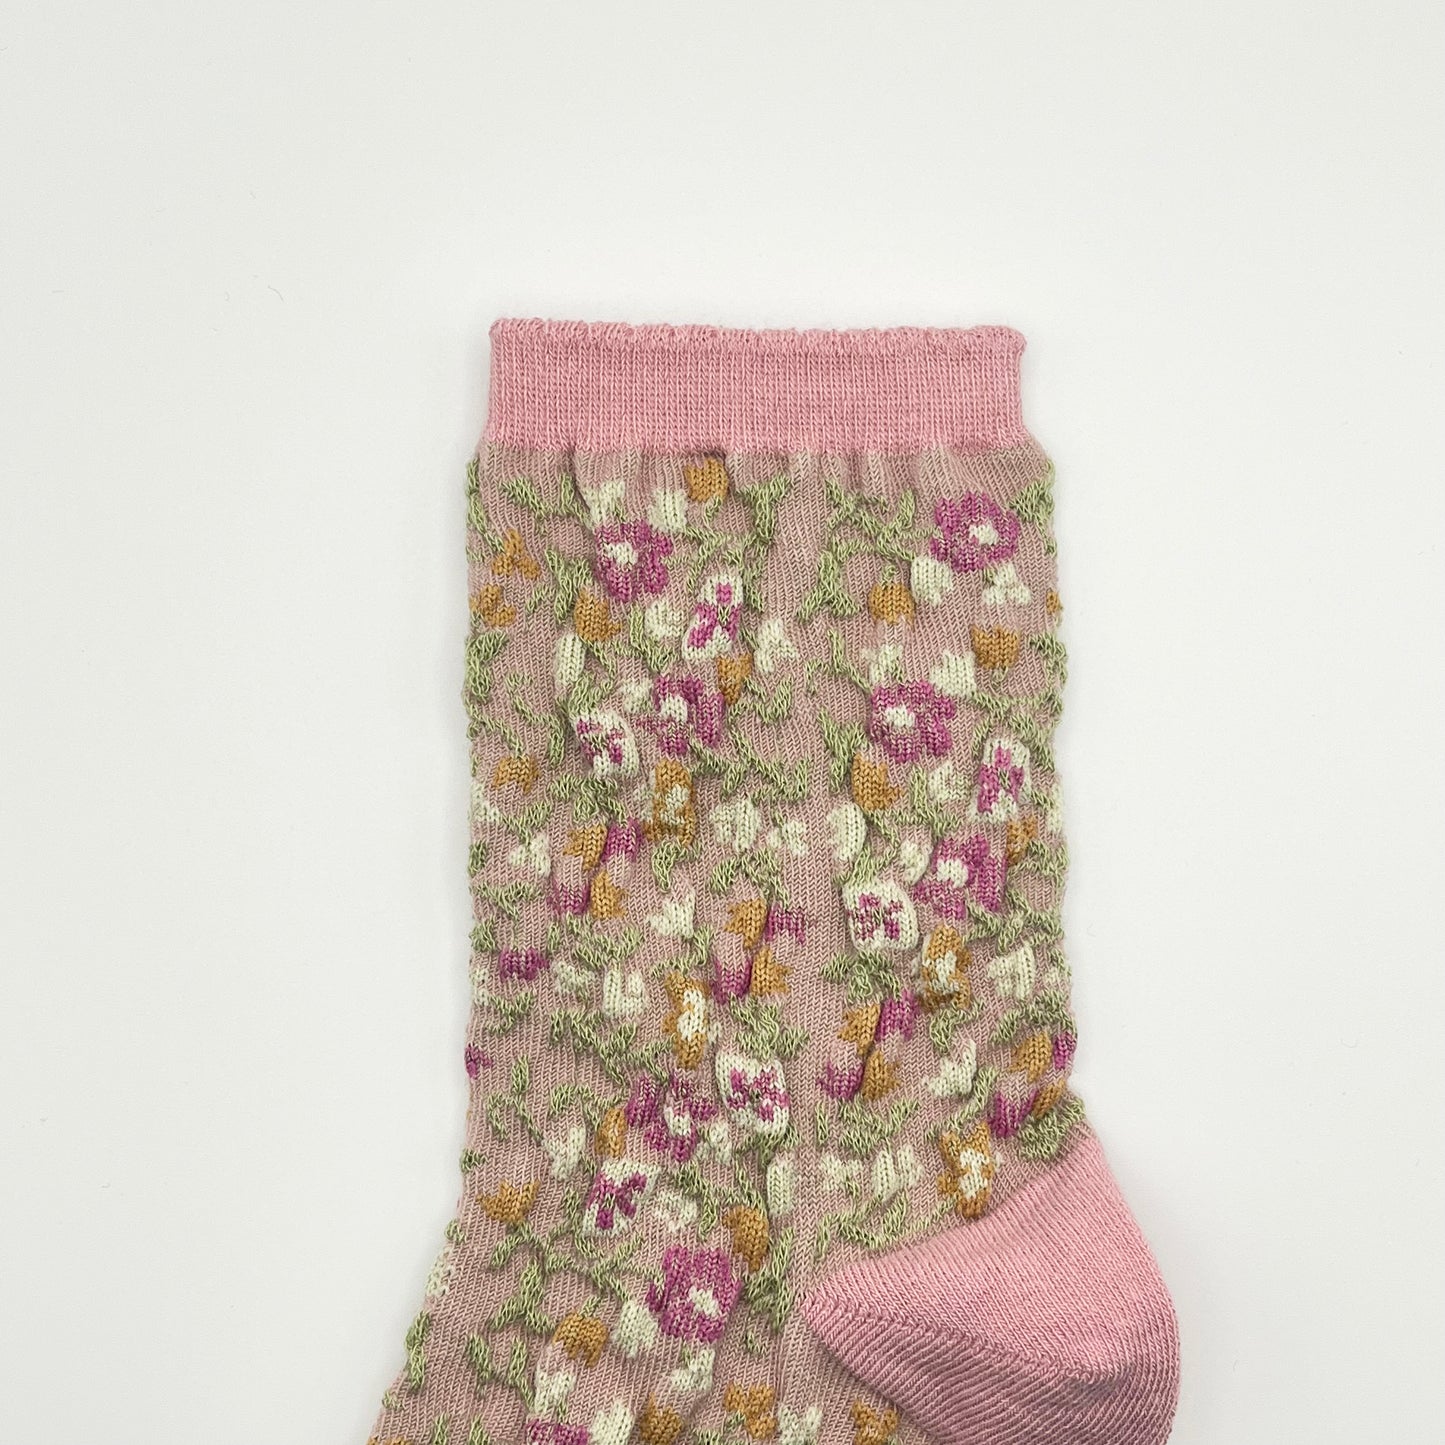 Mori Garden Socks (Grey, White, Pink)